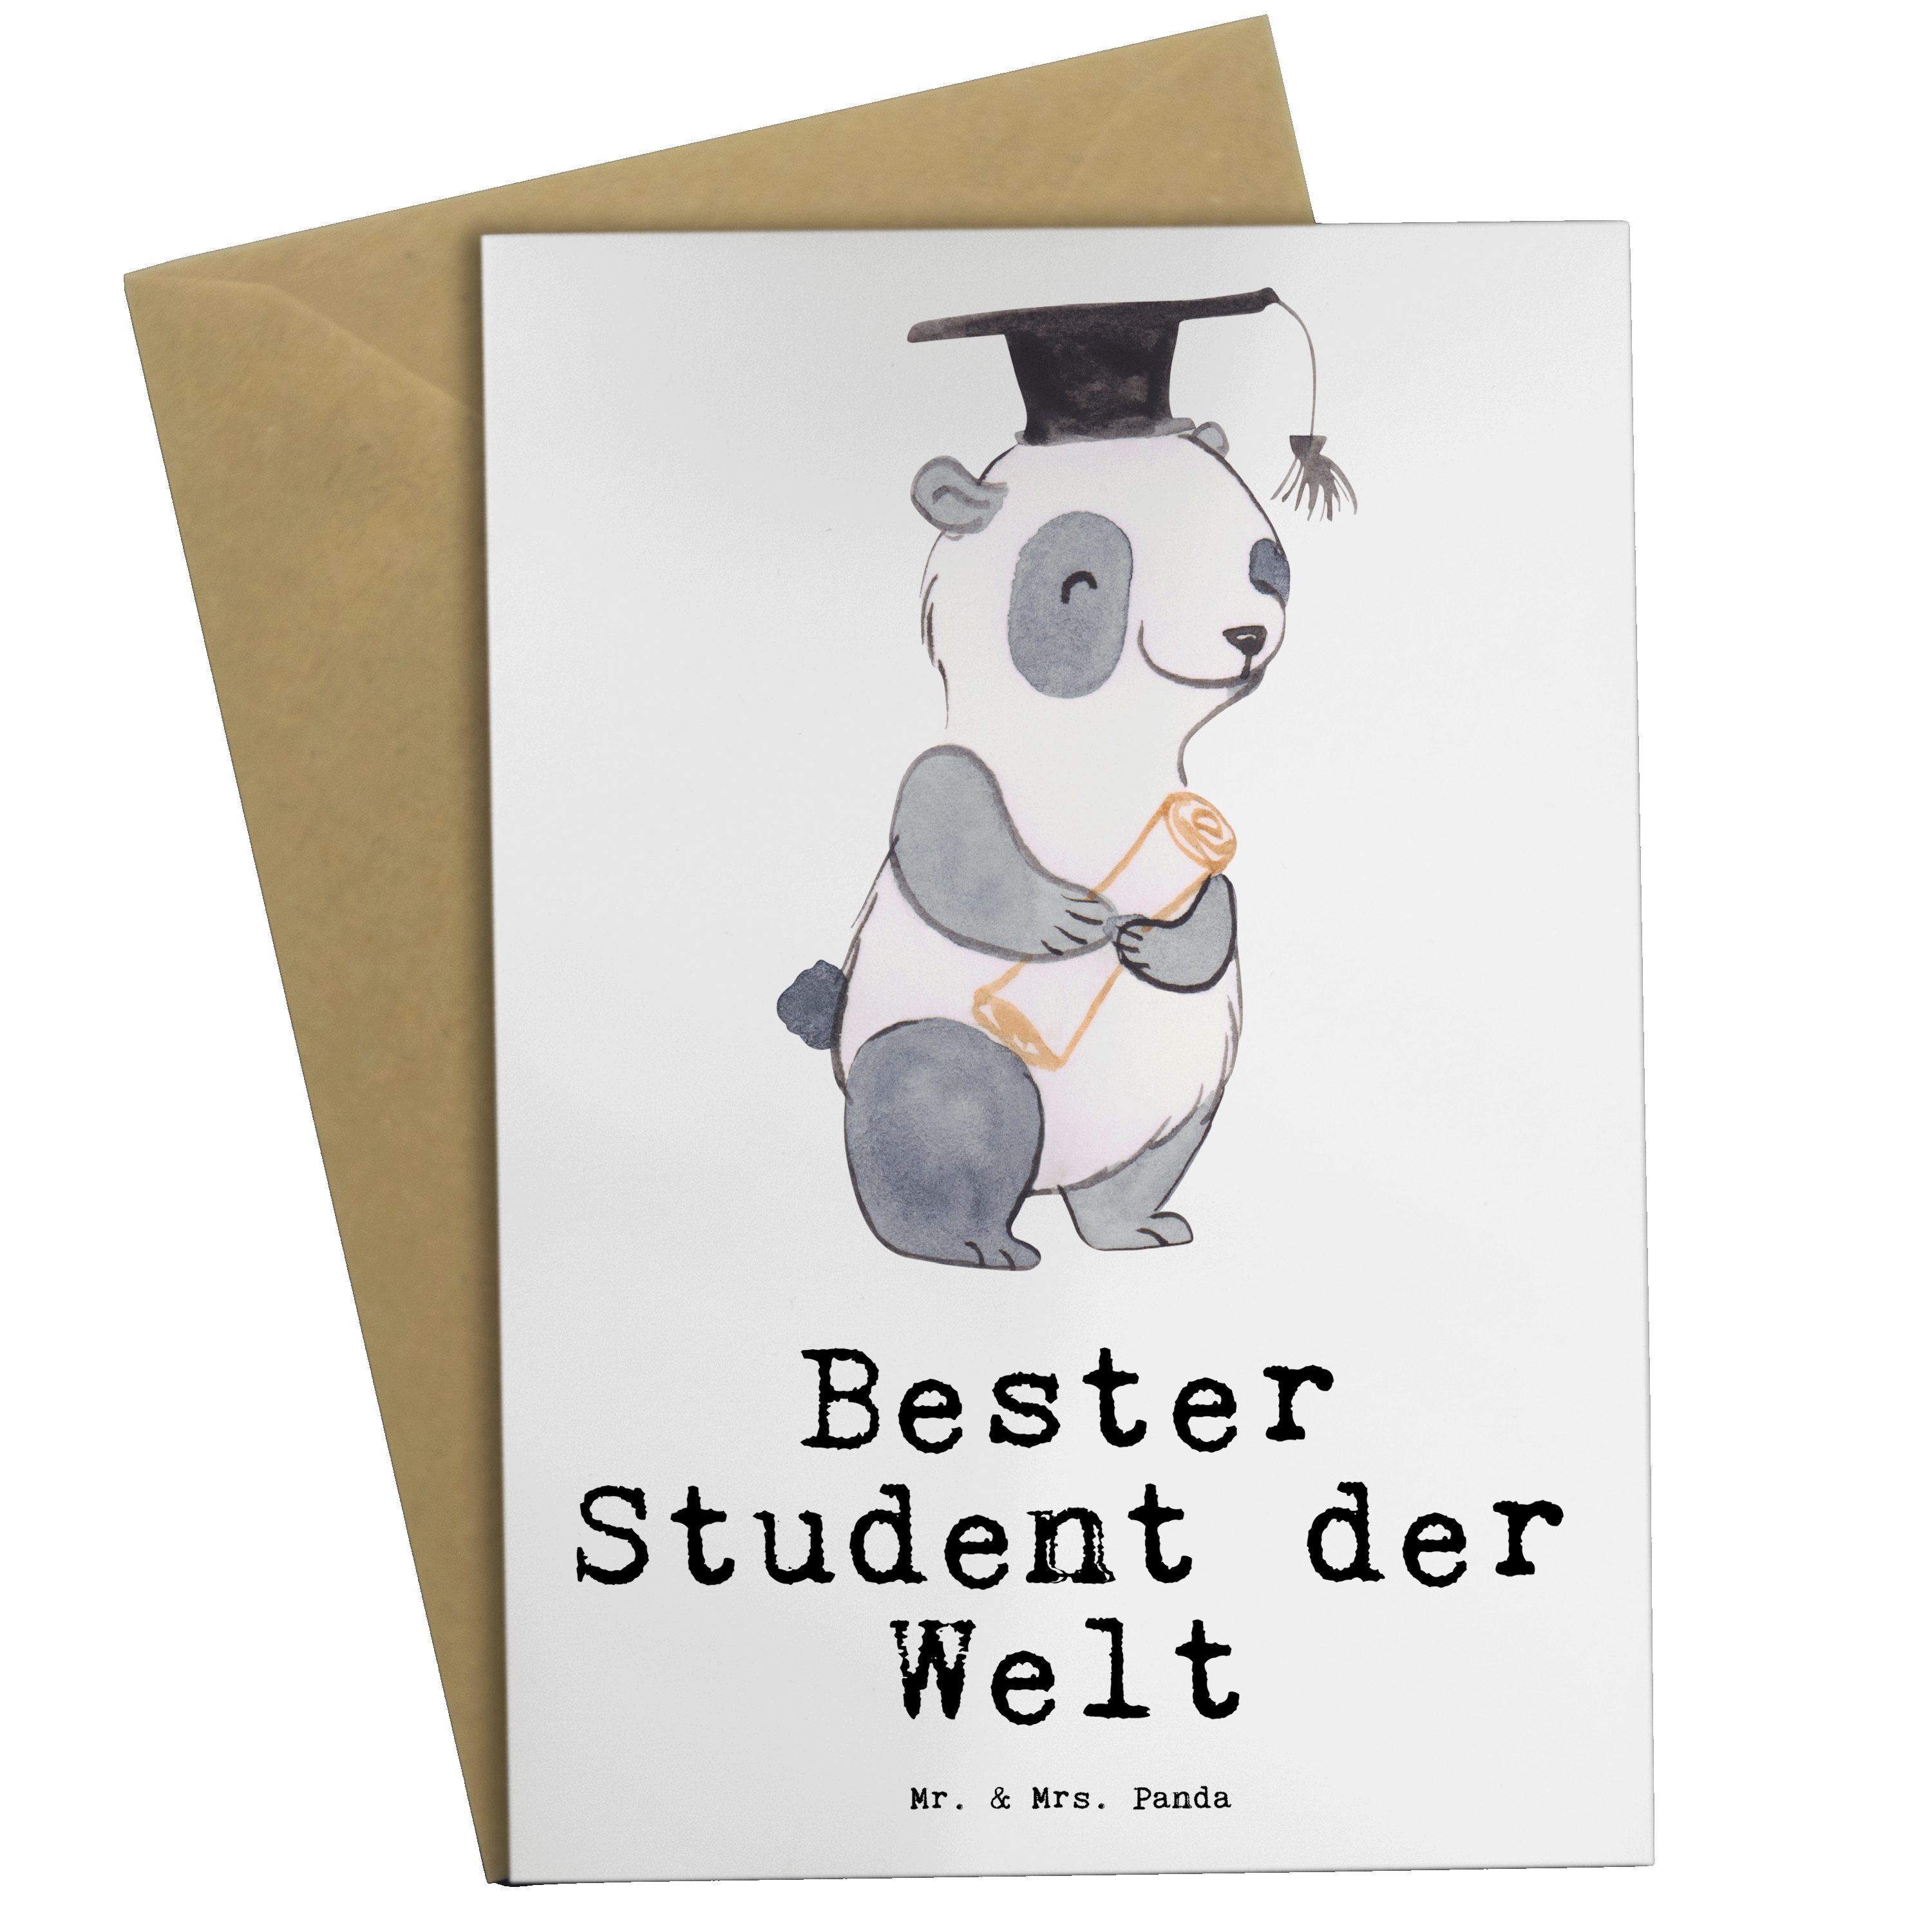 Mr. & Mrs. Panda Grußkarte Panda Bester Student der Welt - Weiß - Geschenk, Geschenktipp, Hochze